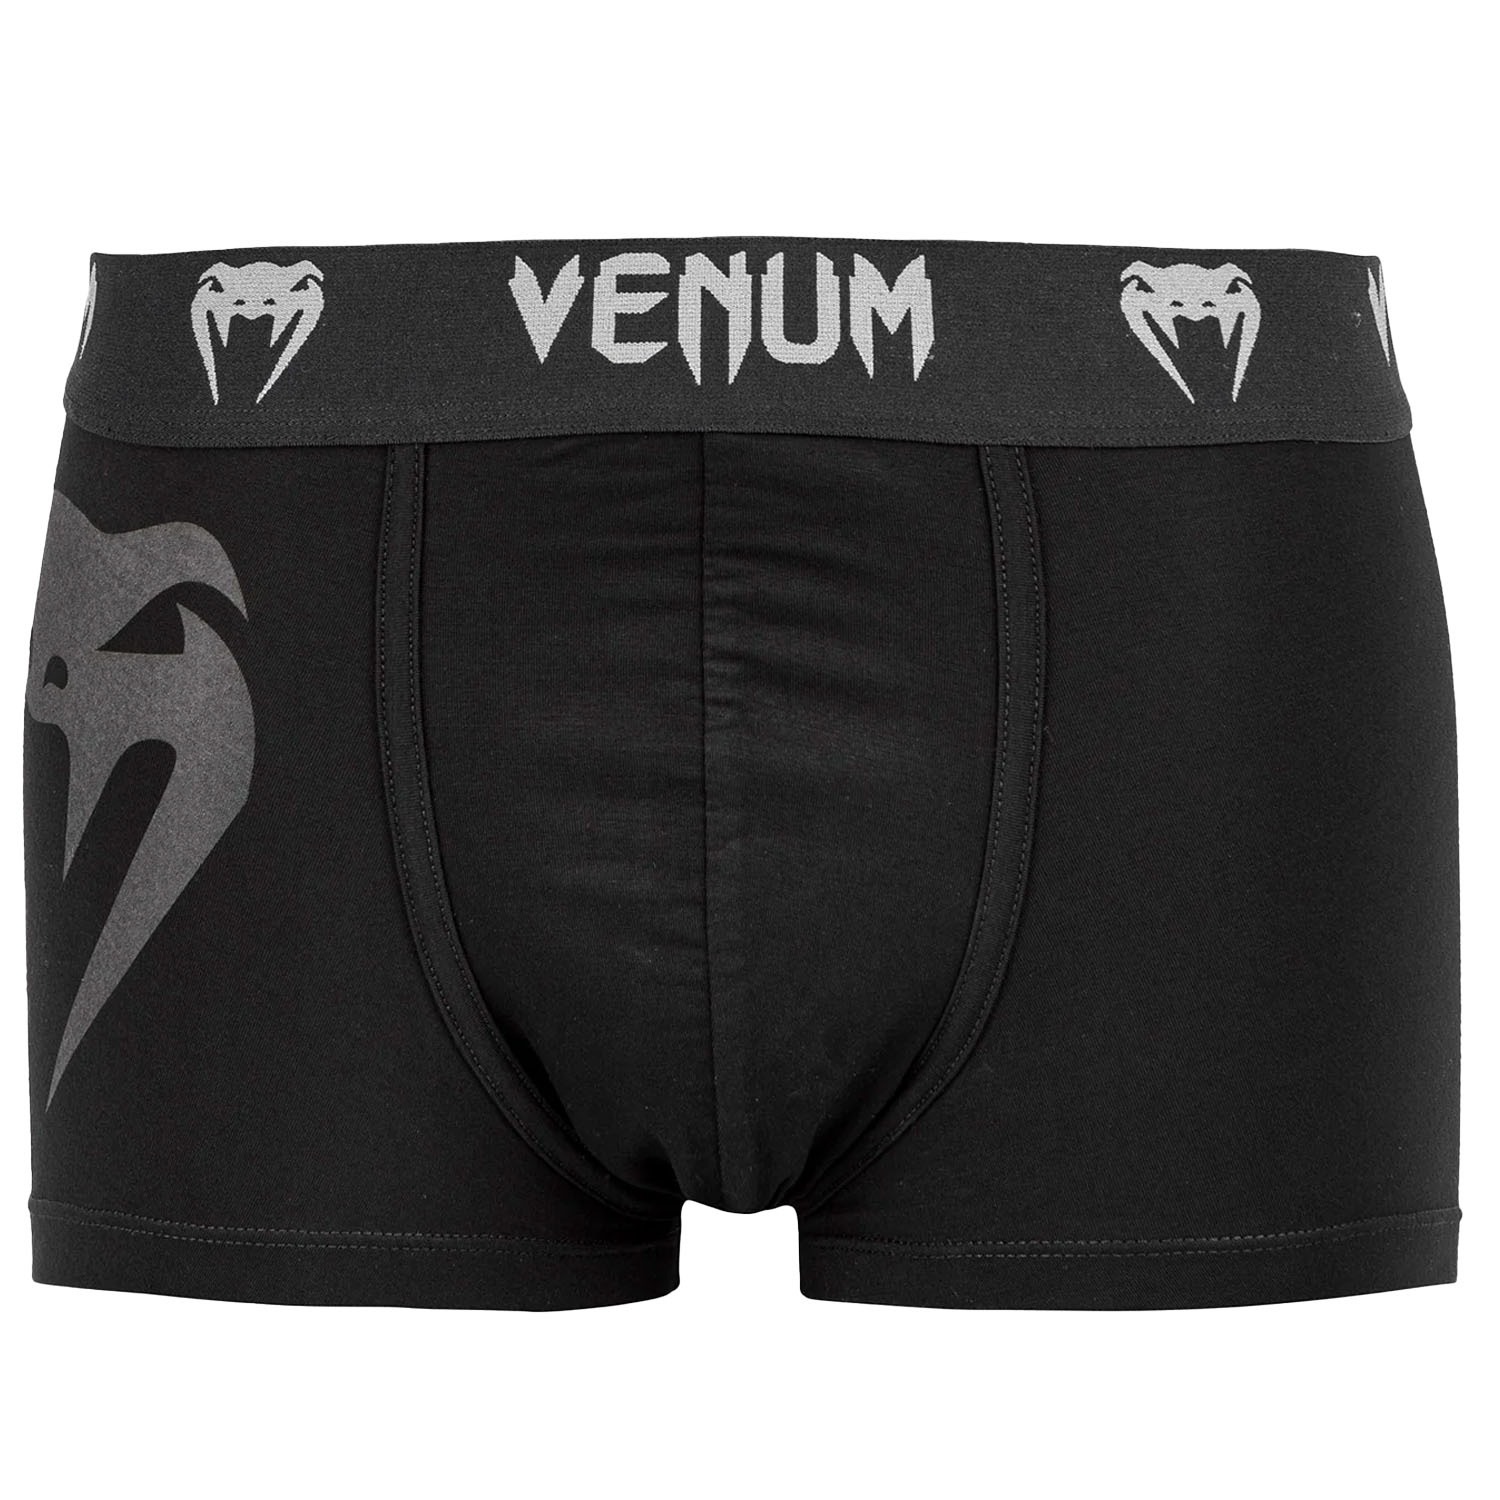 VENUM Boxer Shorts, Giant, schwarz